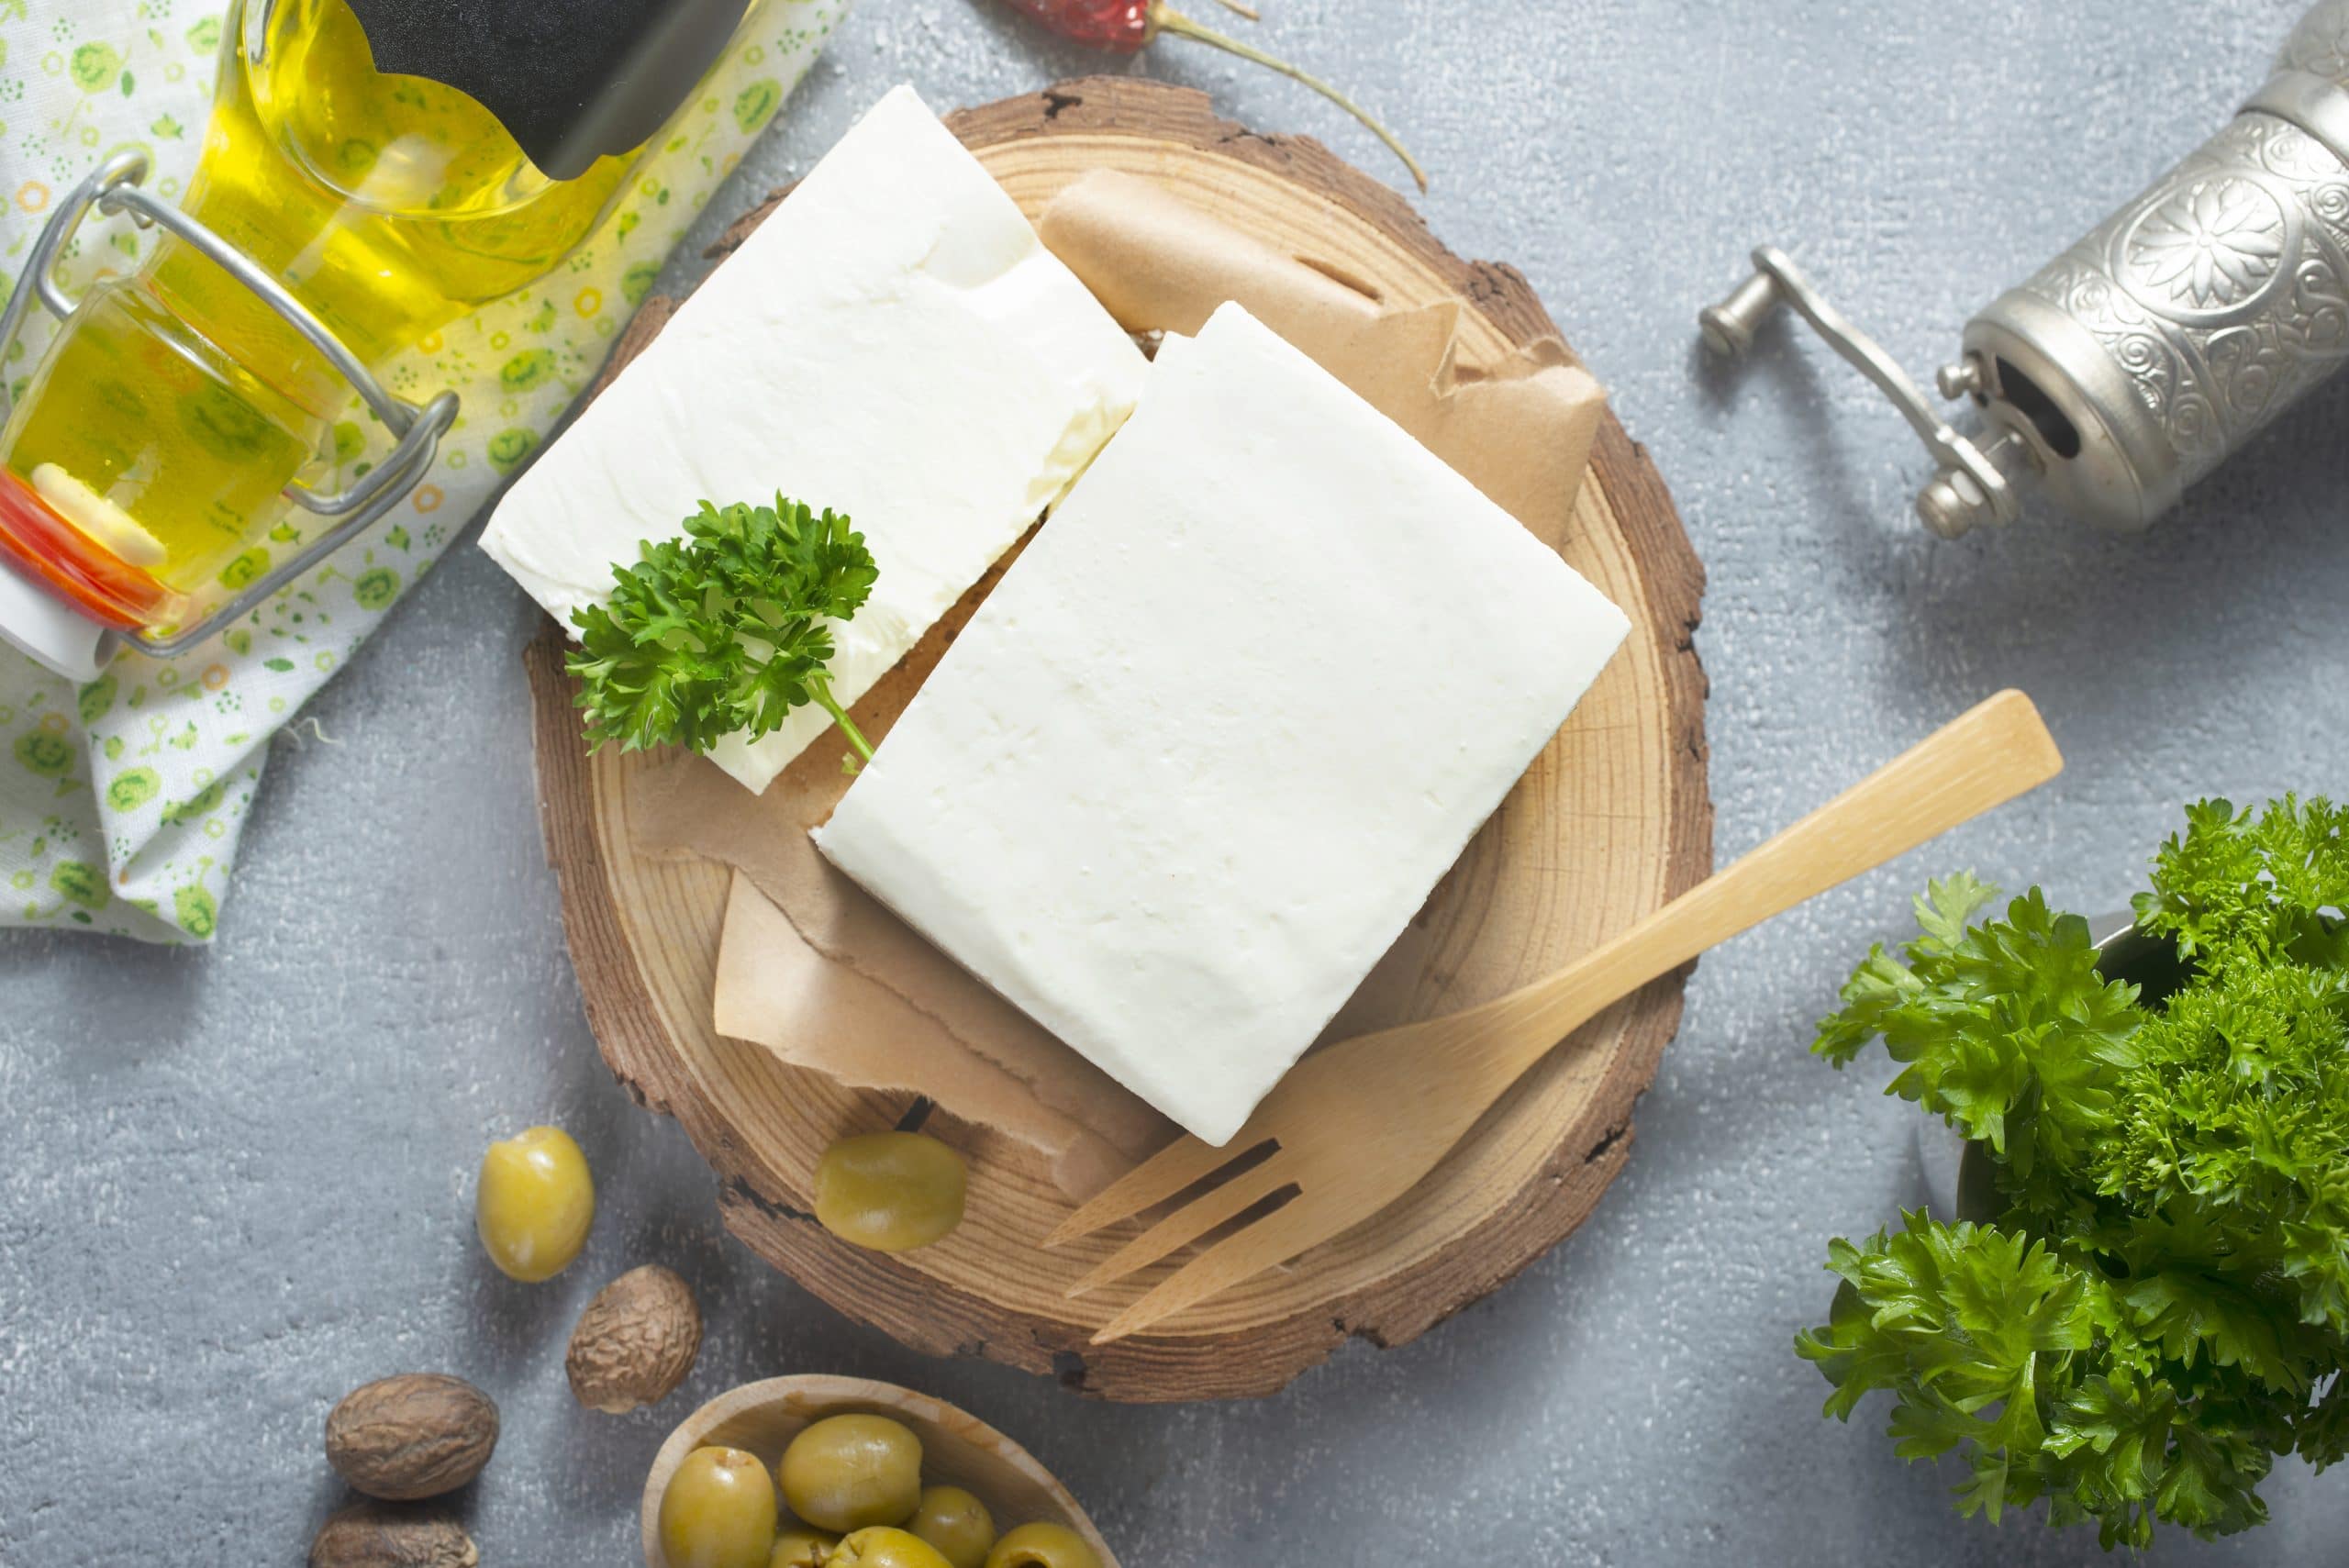 What Does Feta Cheese Taste Like?